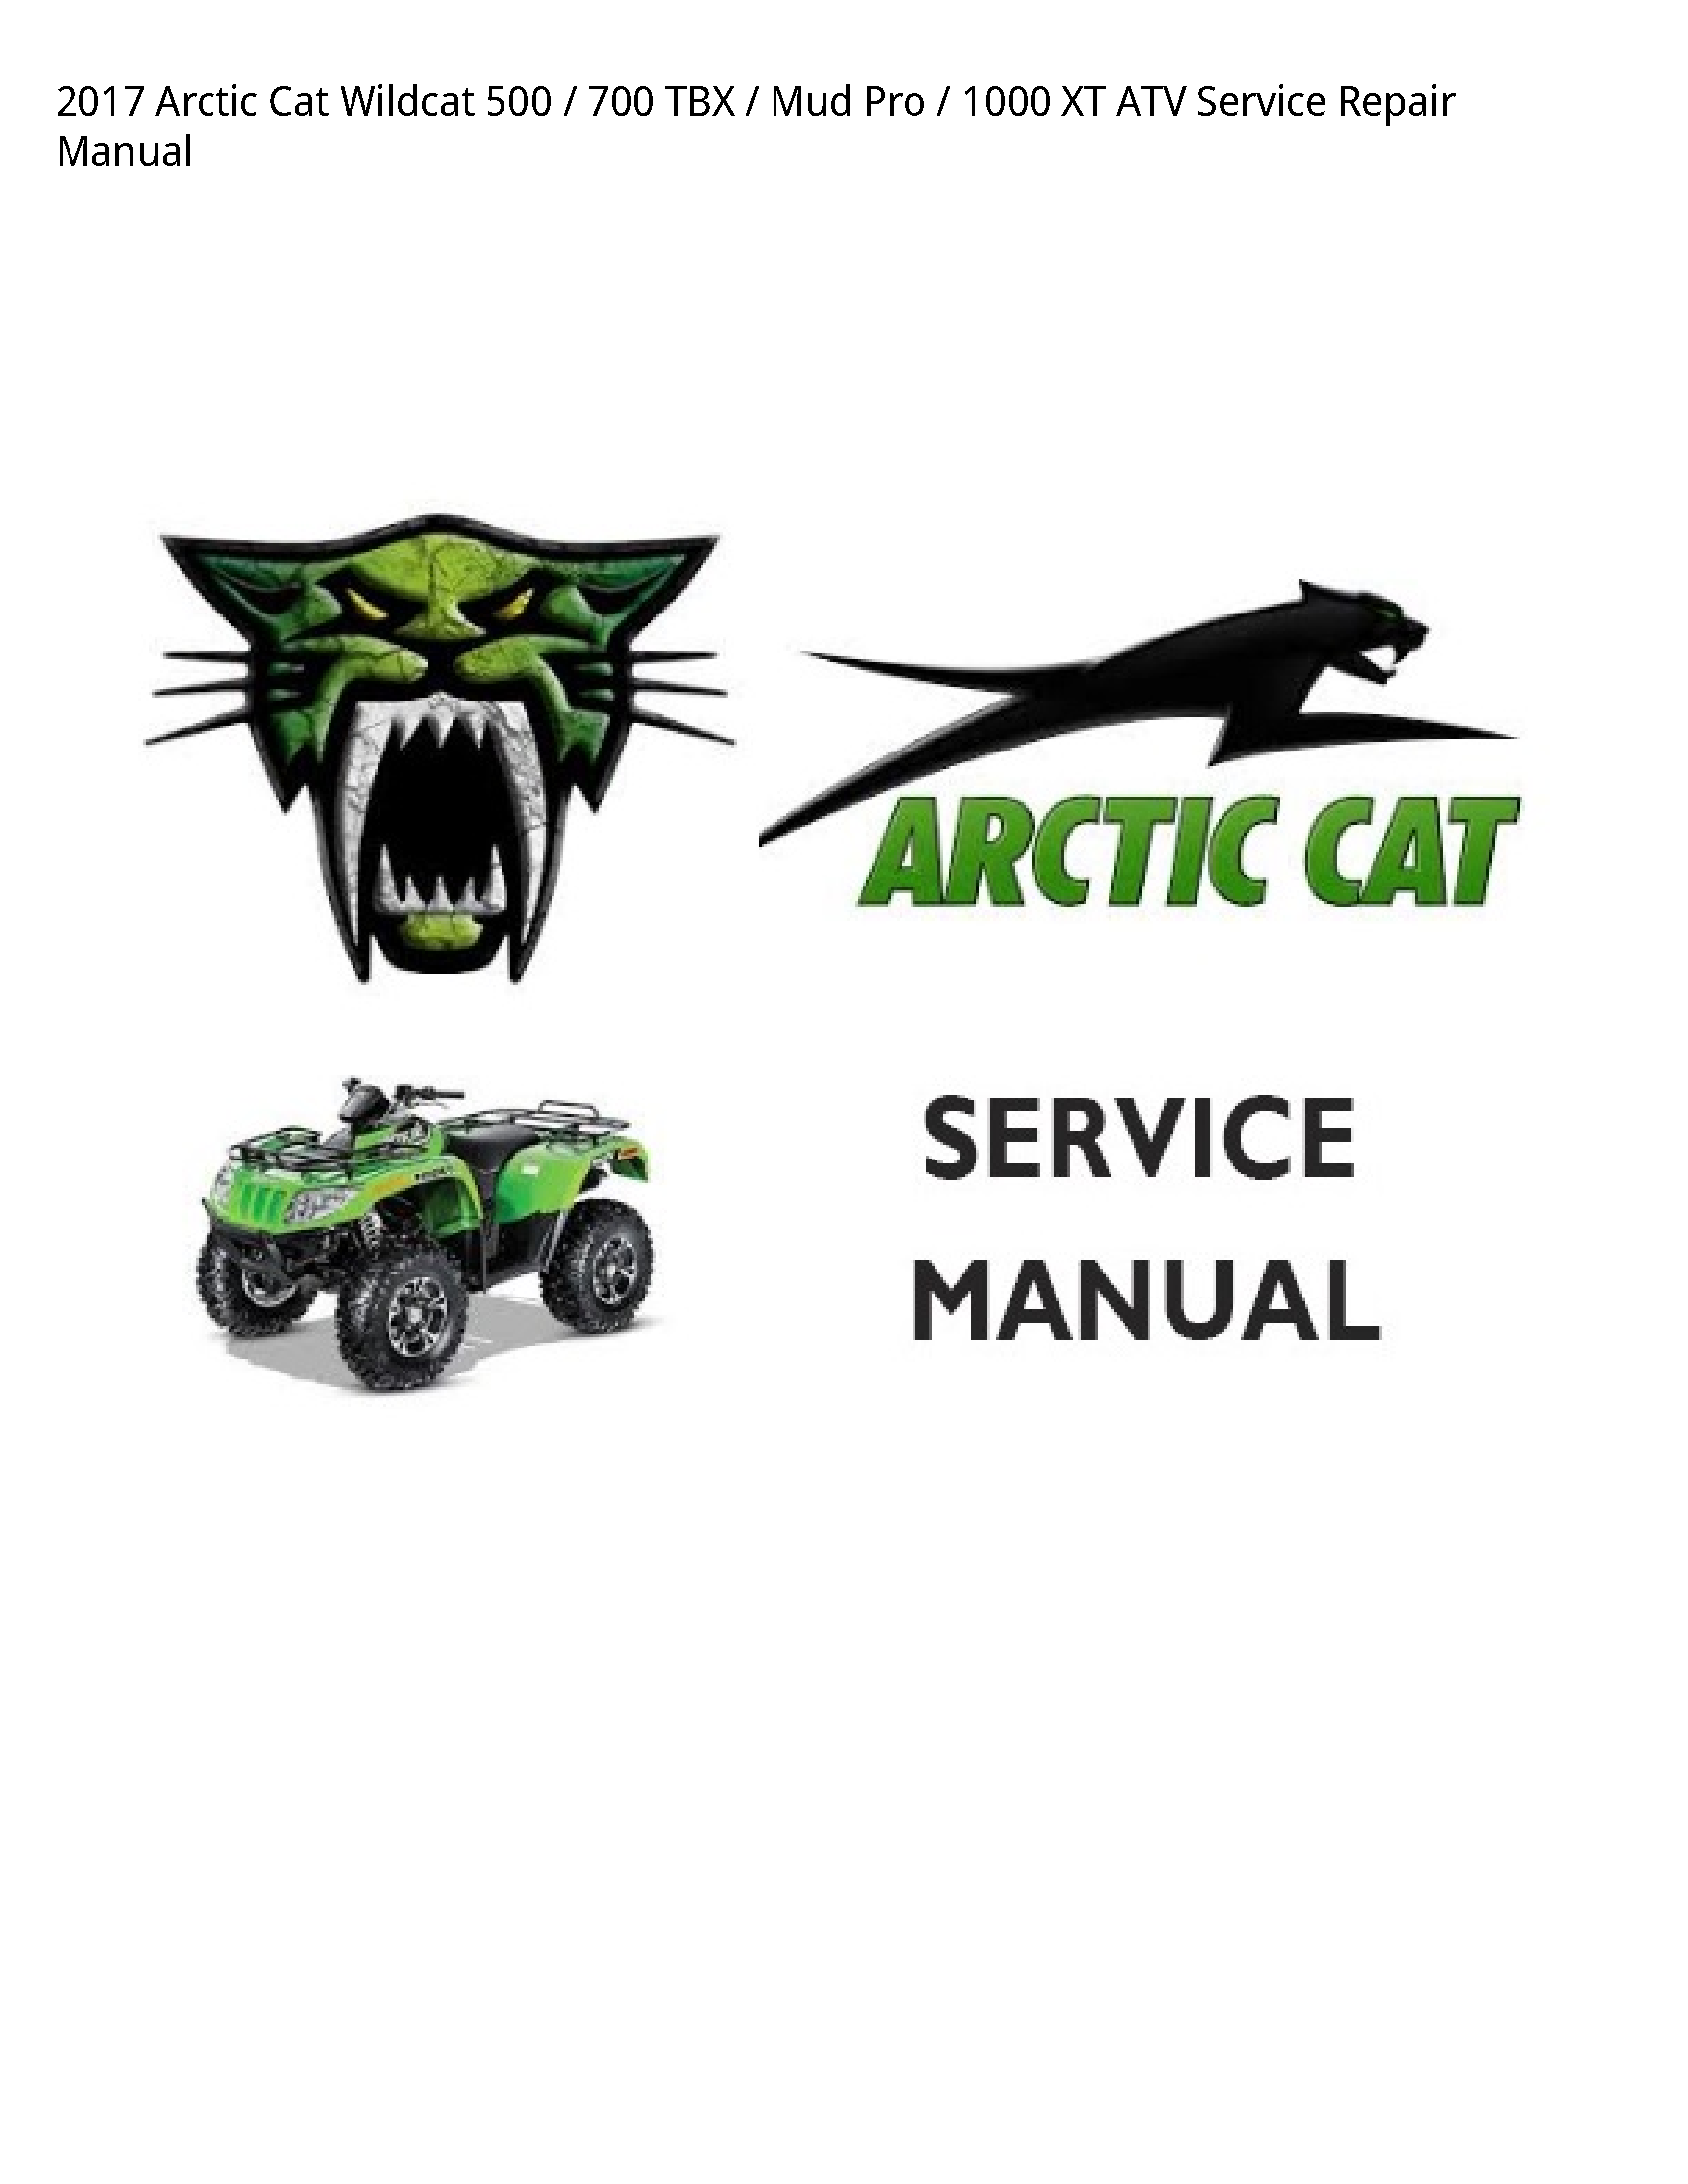 Arctic Cat 500 Wildcat TBX Mud Pro XT ATV manual